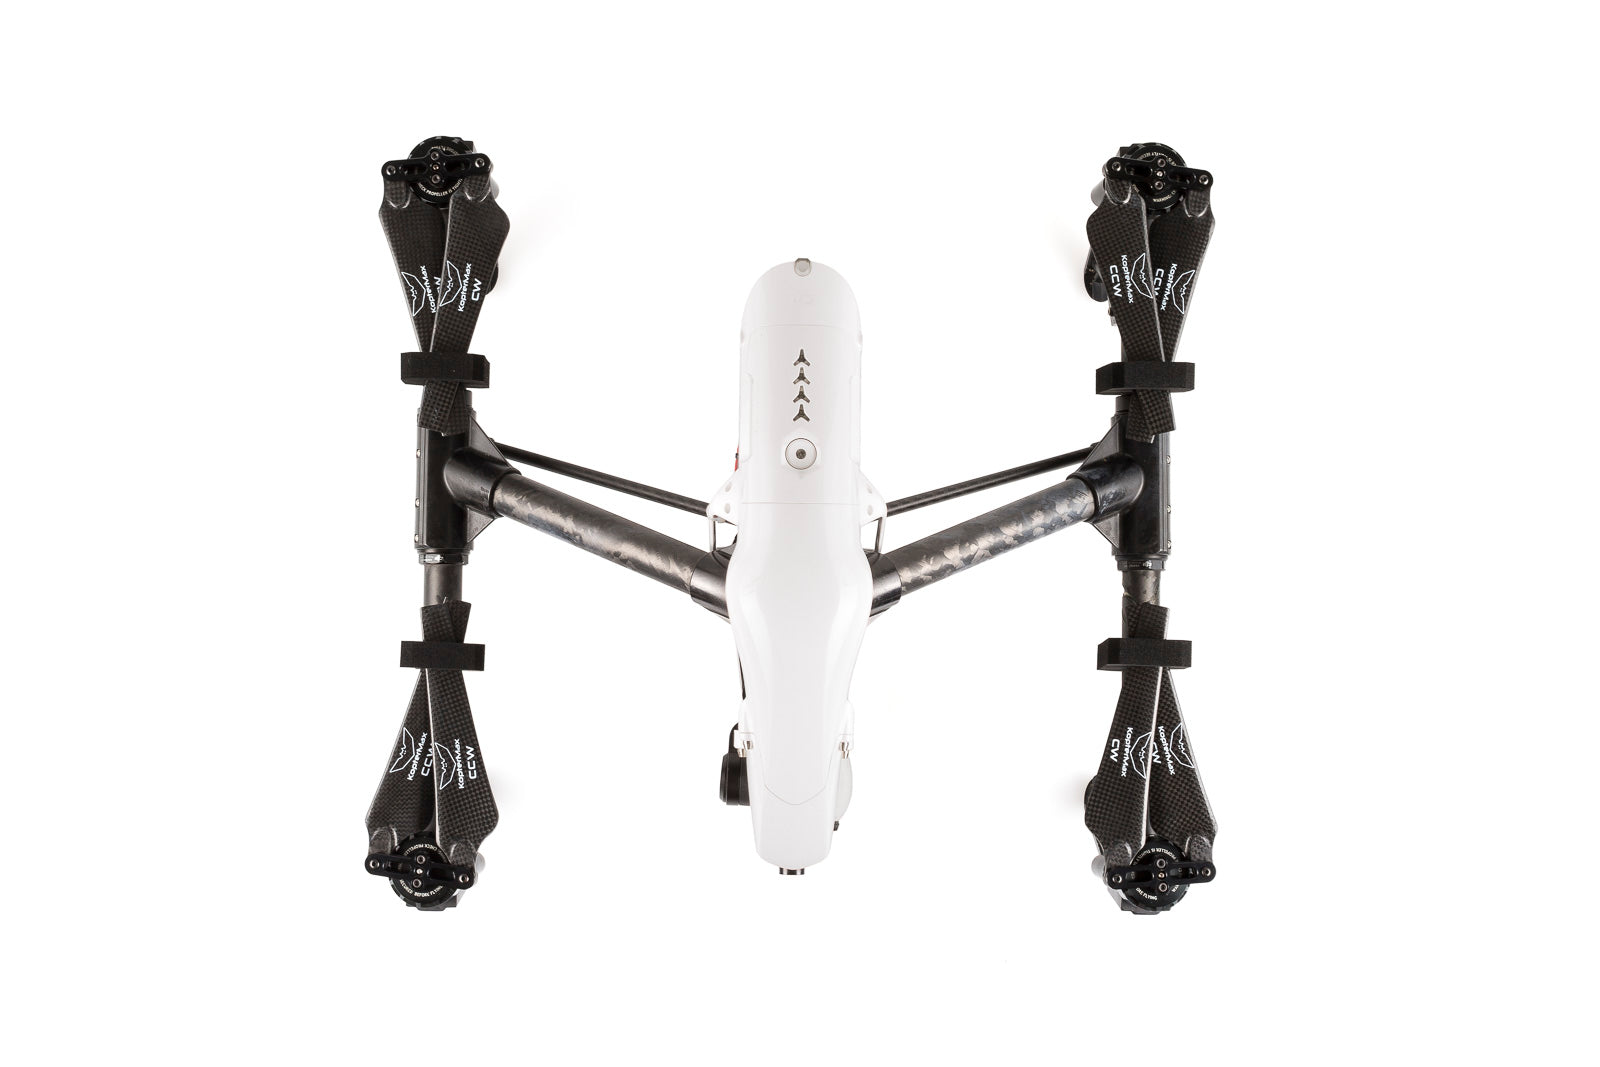 Carbon Fiber folding propellers for DJI Inspire 1/Matrice 100 drone